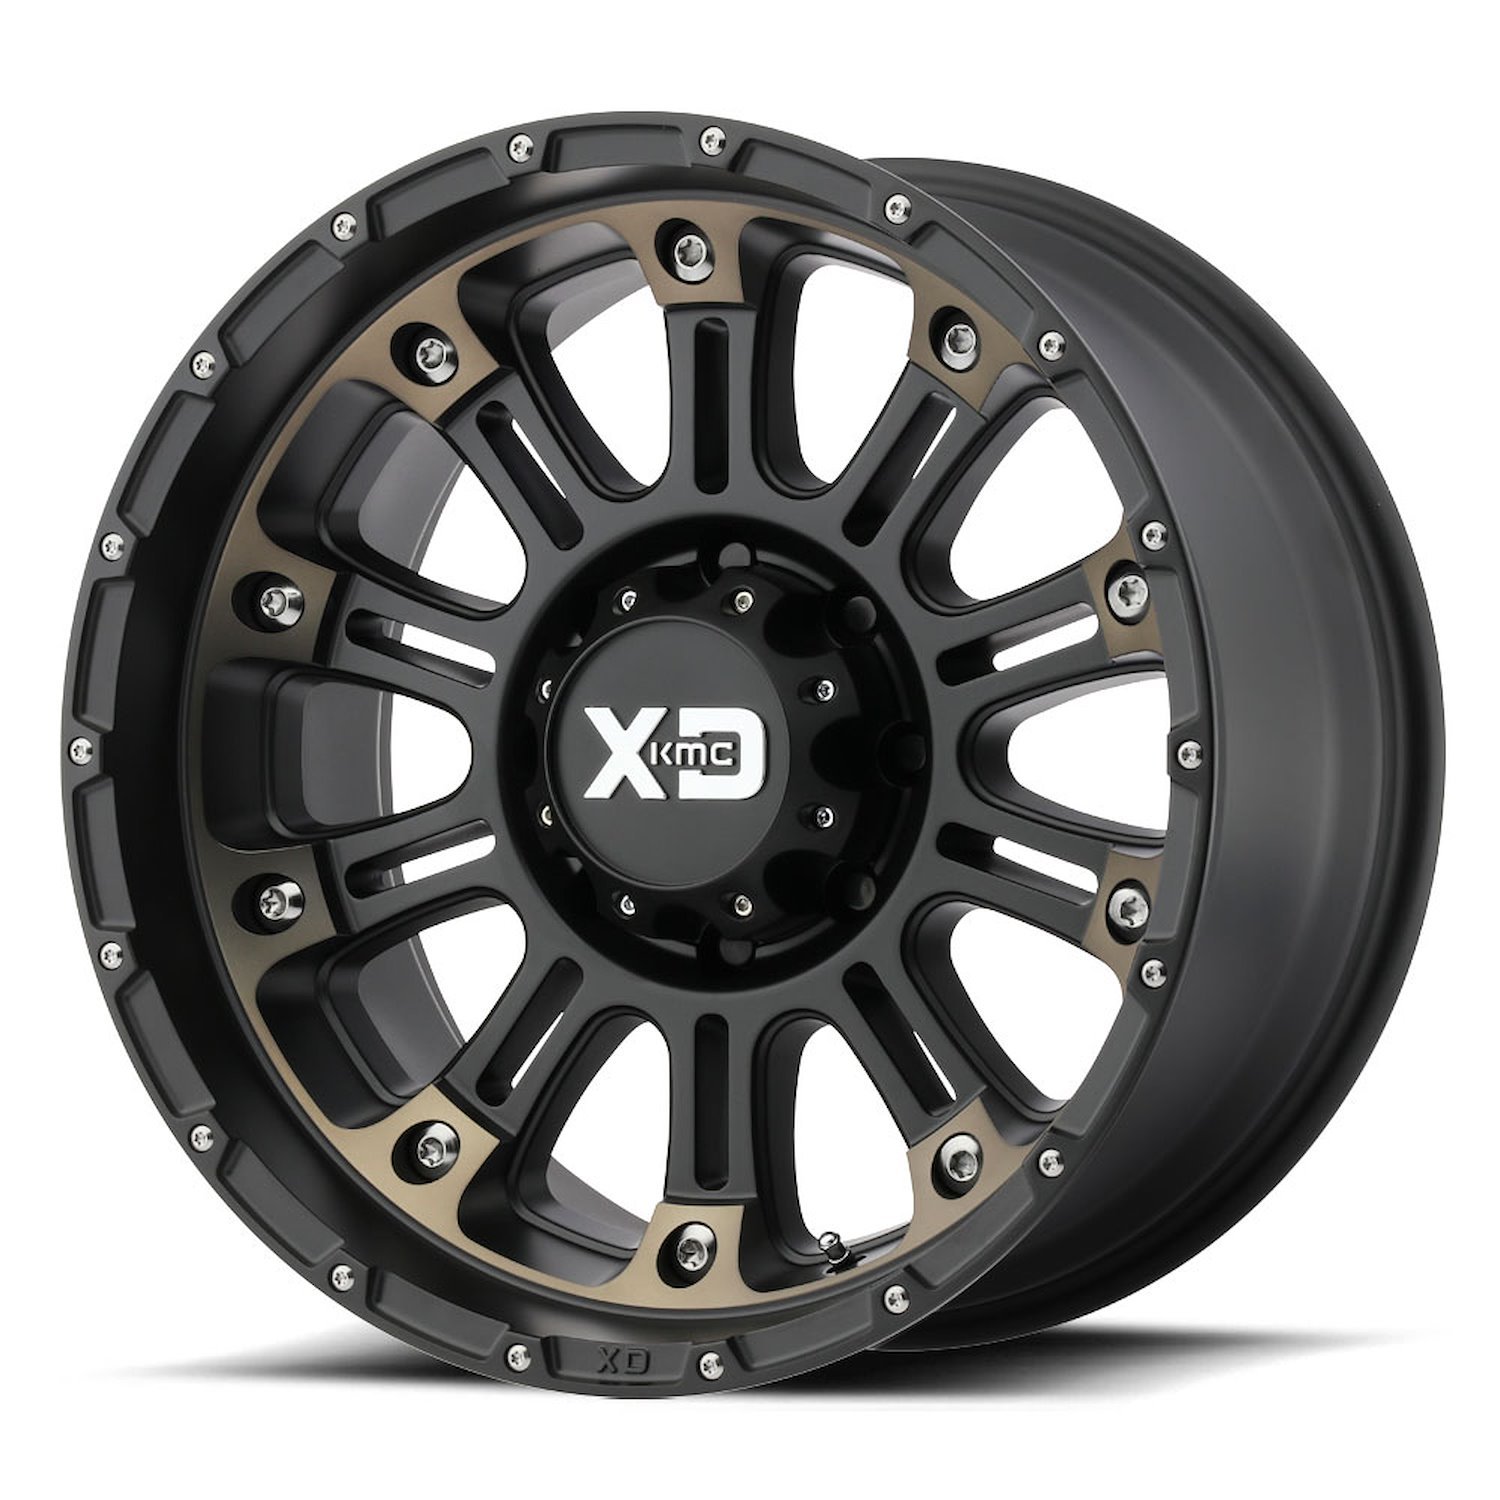 XD829 Series Hoss Wheel Size: 17'' x 9''